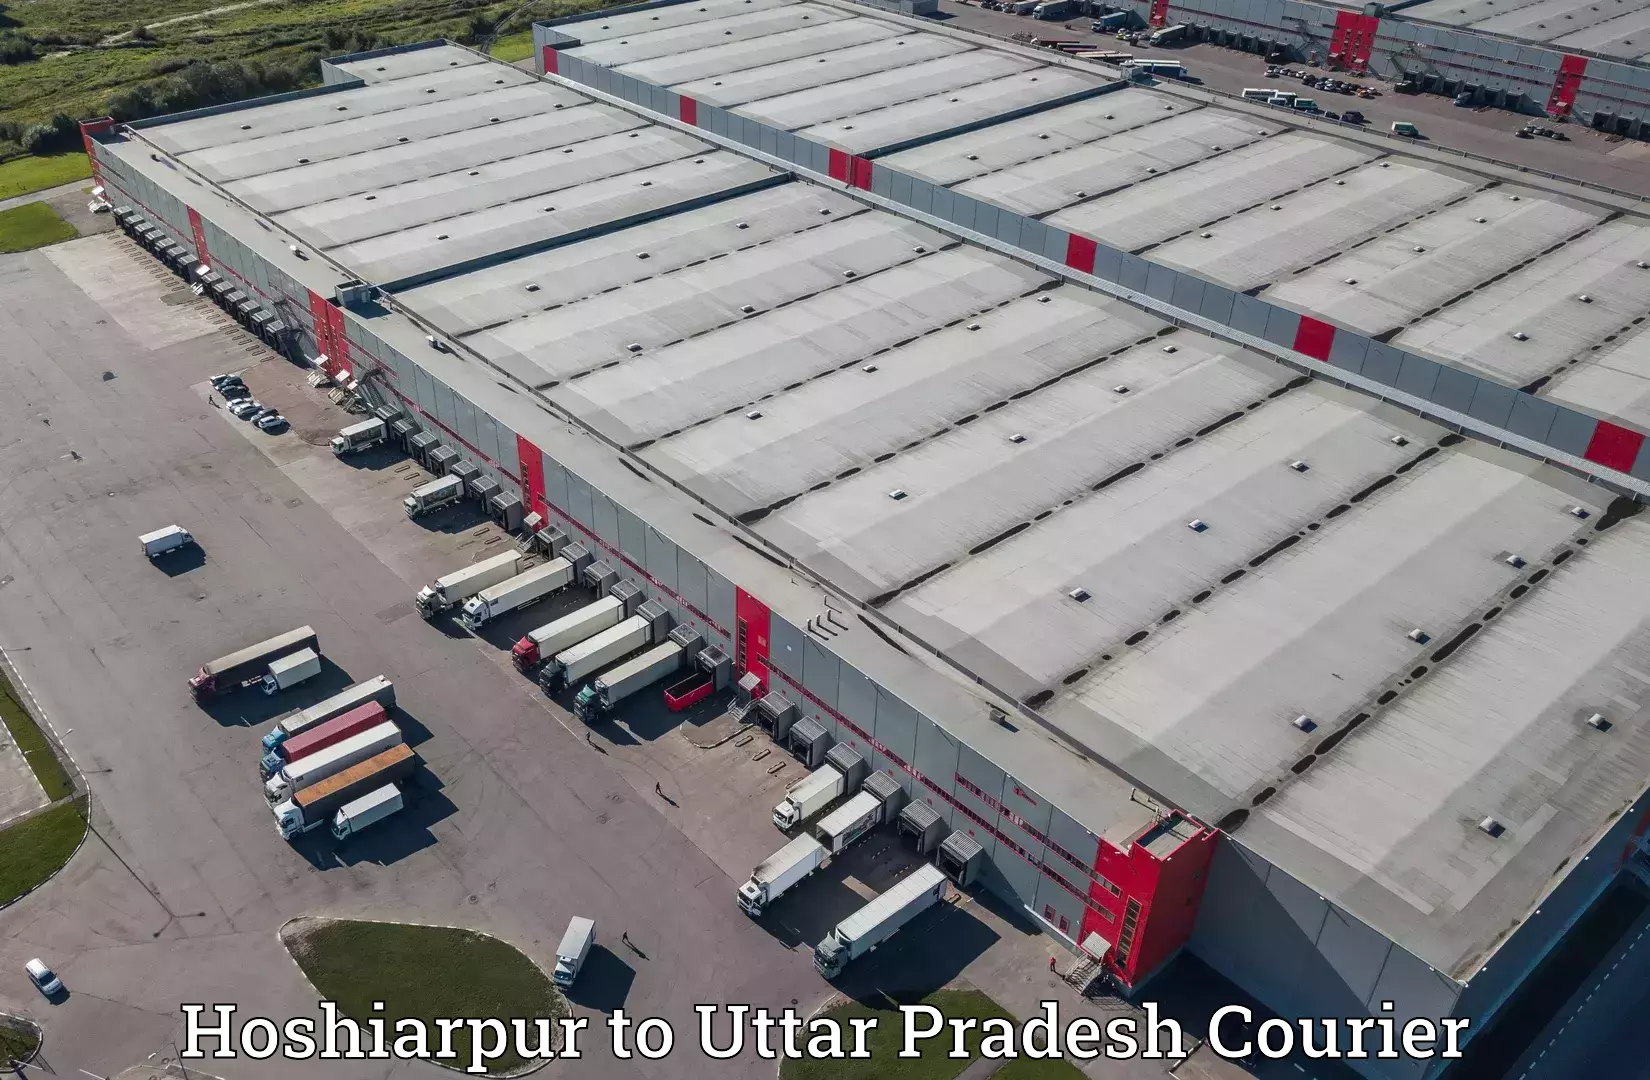 Courier service partnerships Hoshiarpur to Jewar